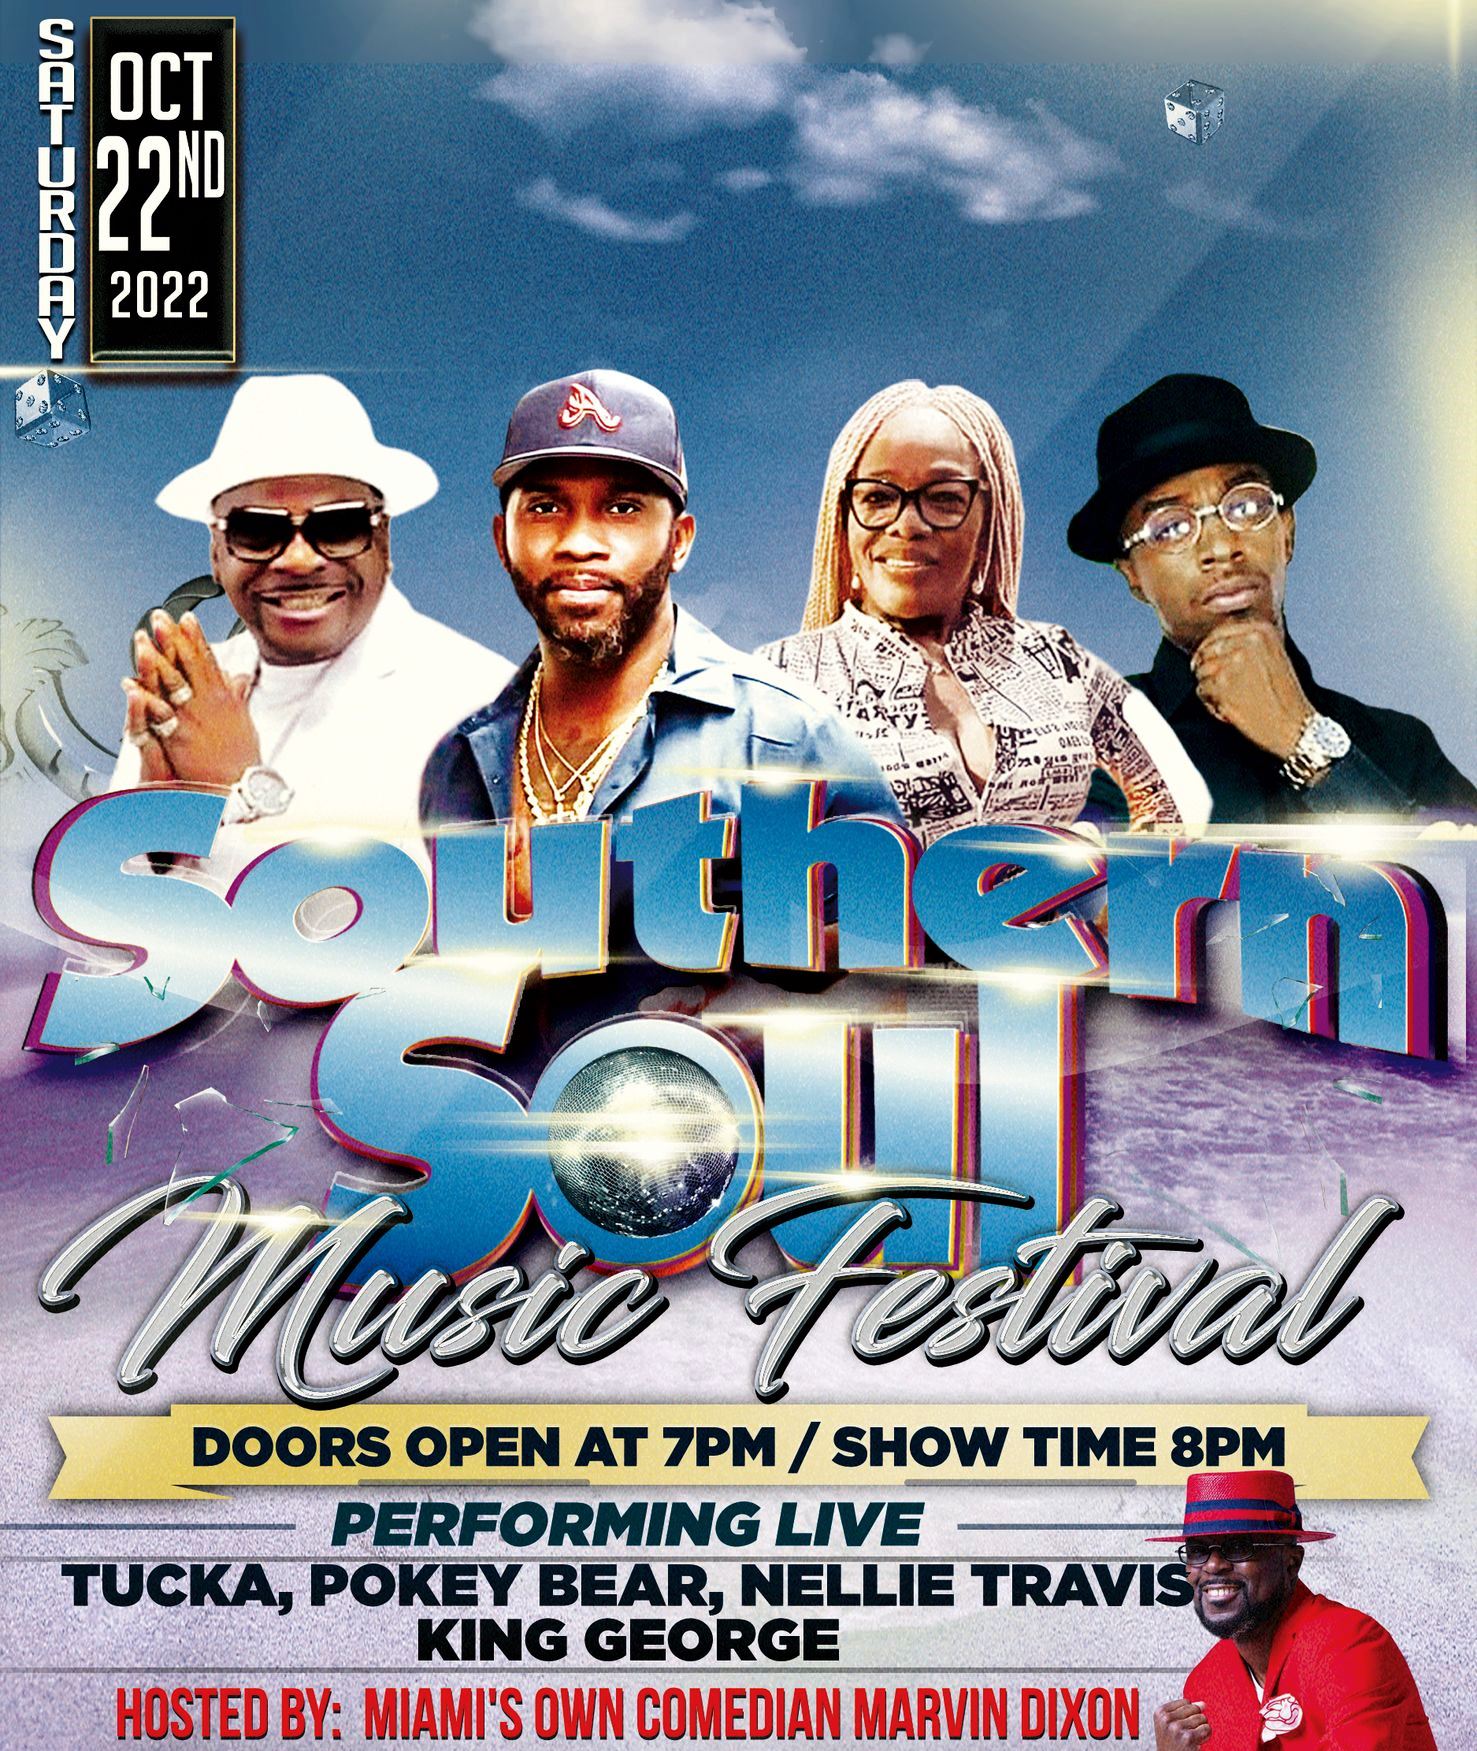 Southern Soul Music Festival